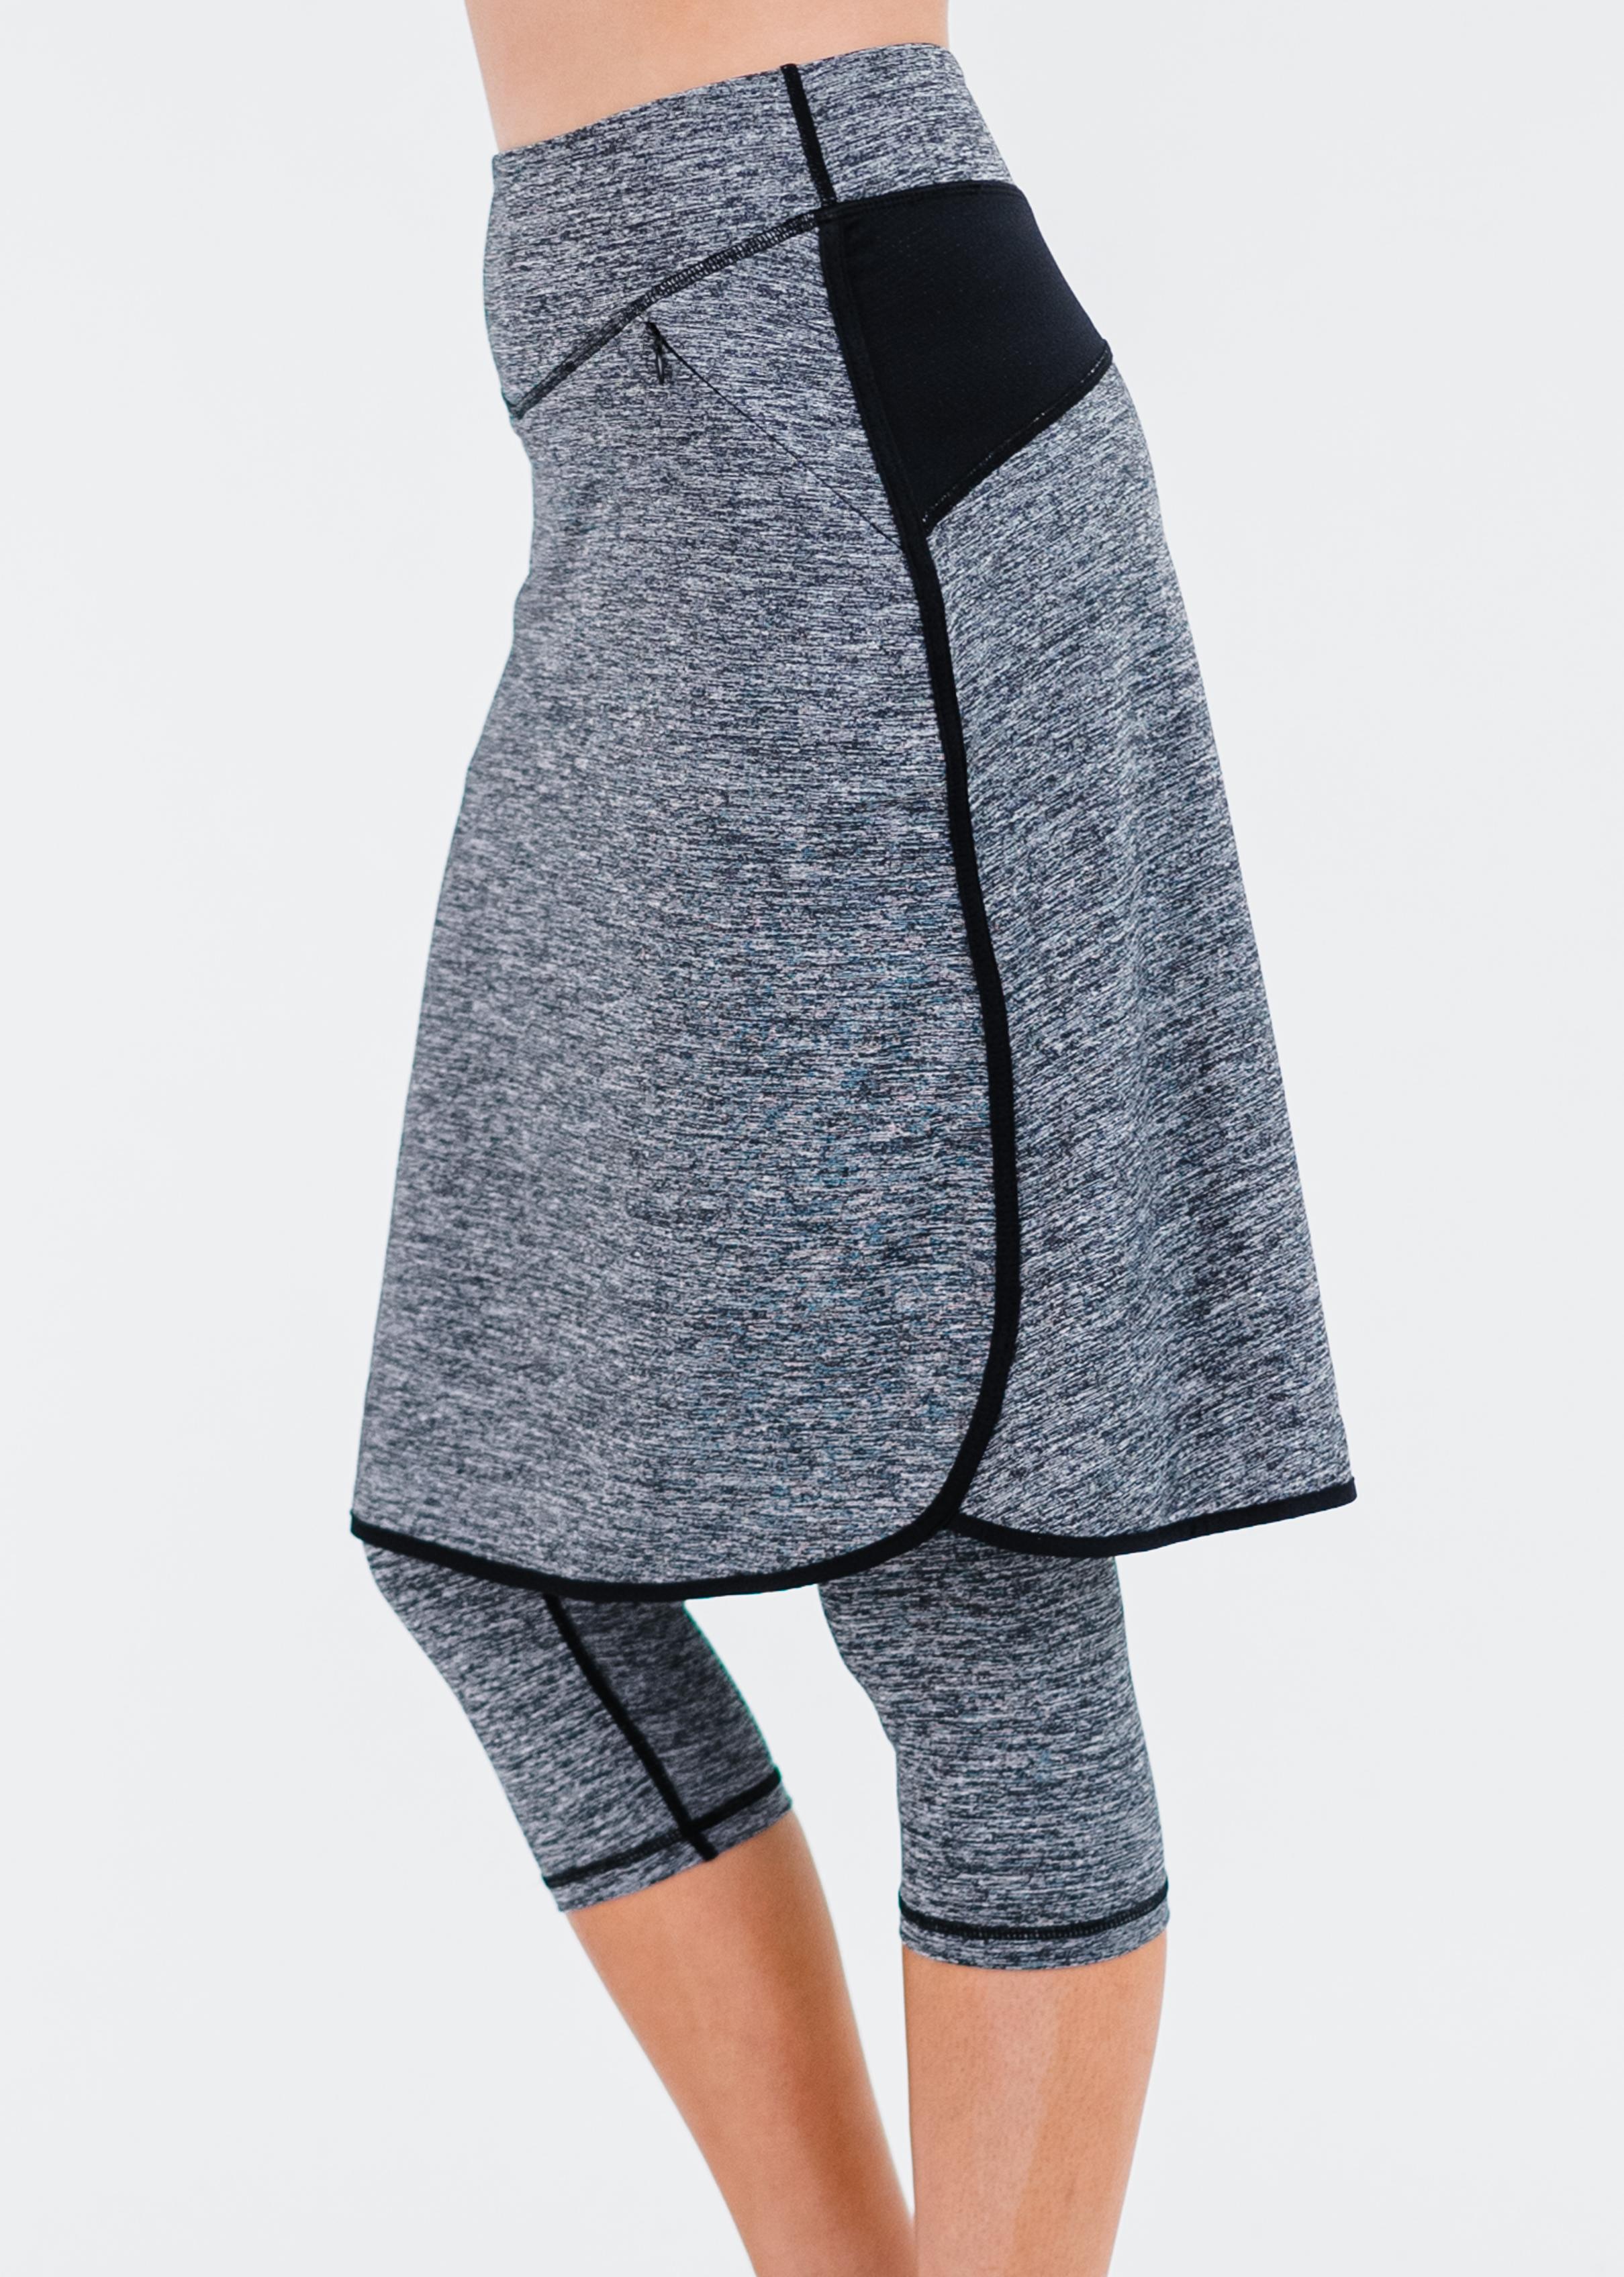 Knee Length Lycra® Sport Skirt with Attached 17 Leggings. Calypsa